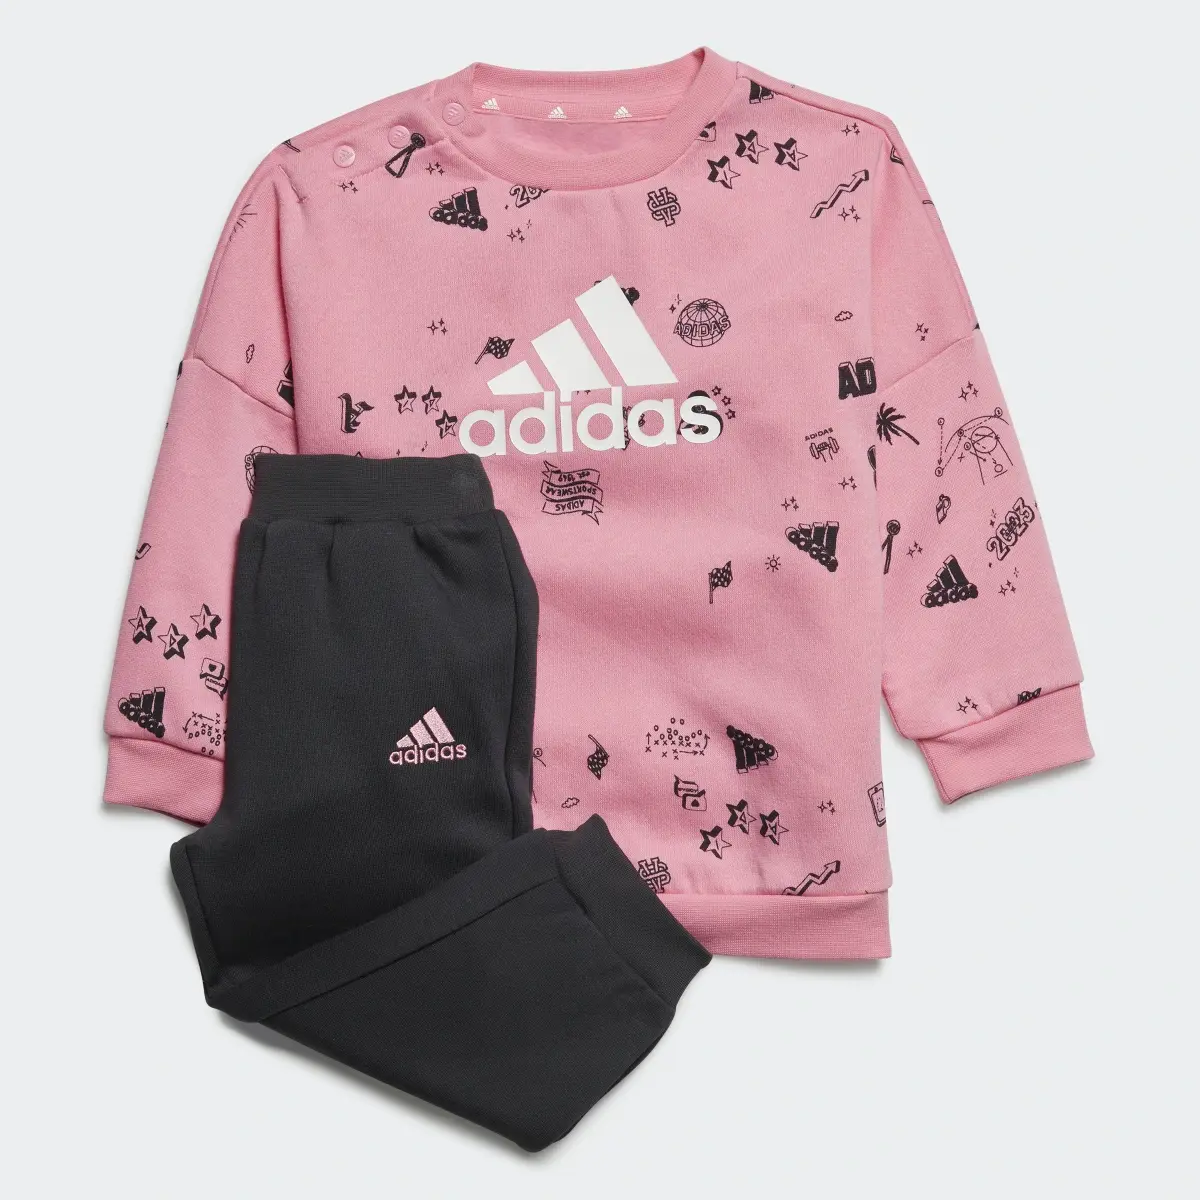 Adidas Brand Love Crew Sweatshirt Set Kids. 2